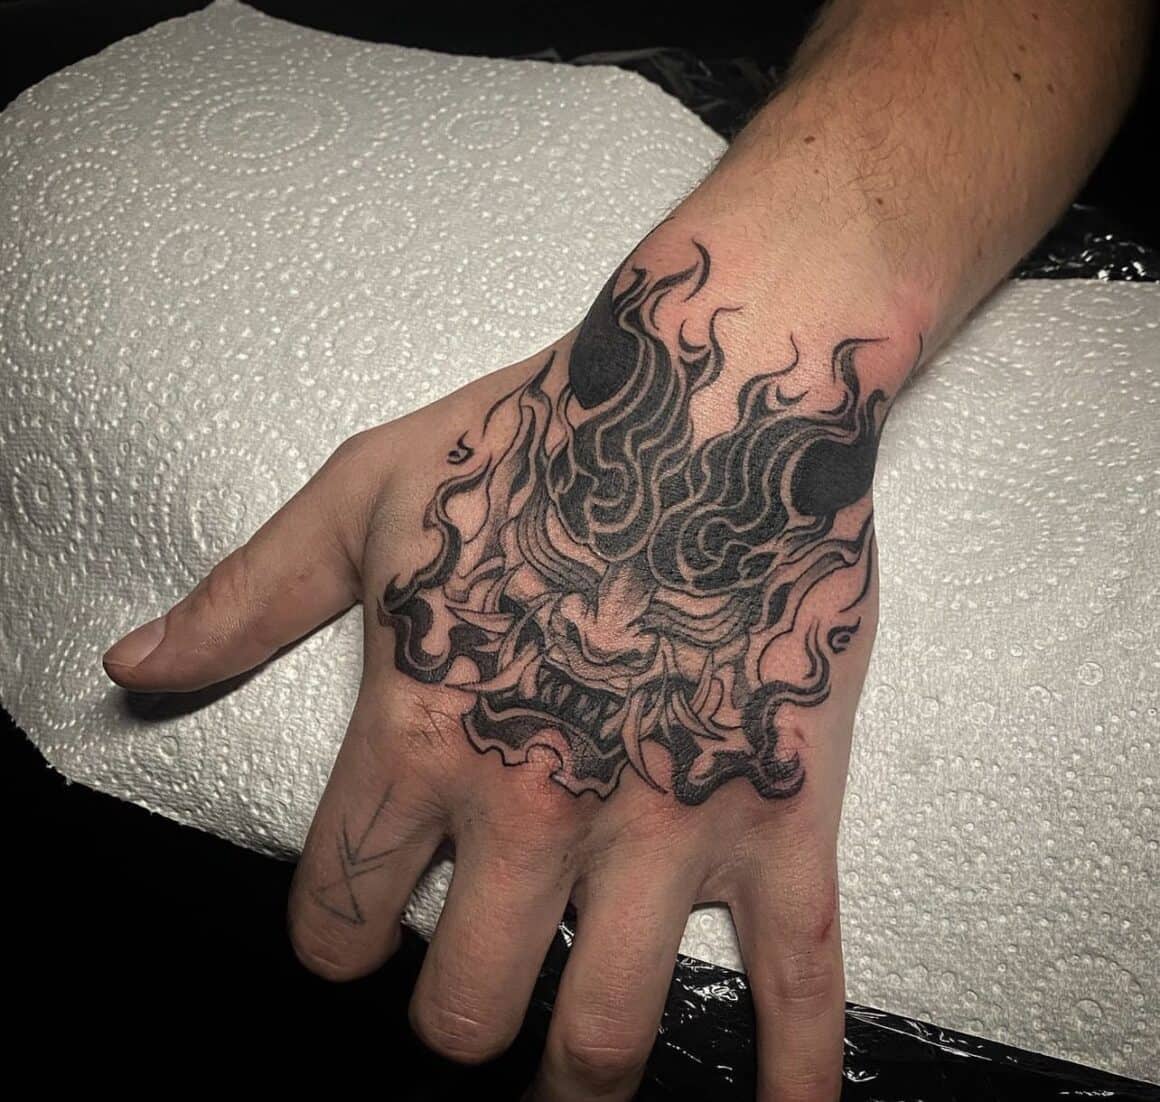 Hand Tattoos For Men 20 Hand Tattoos For Men That Leave A Lasting Impression • Body Artifact